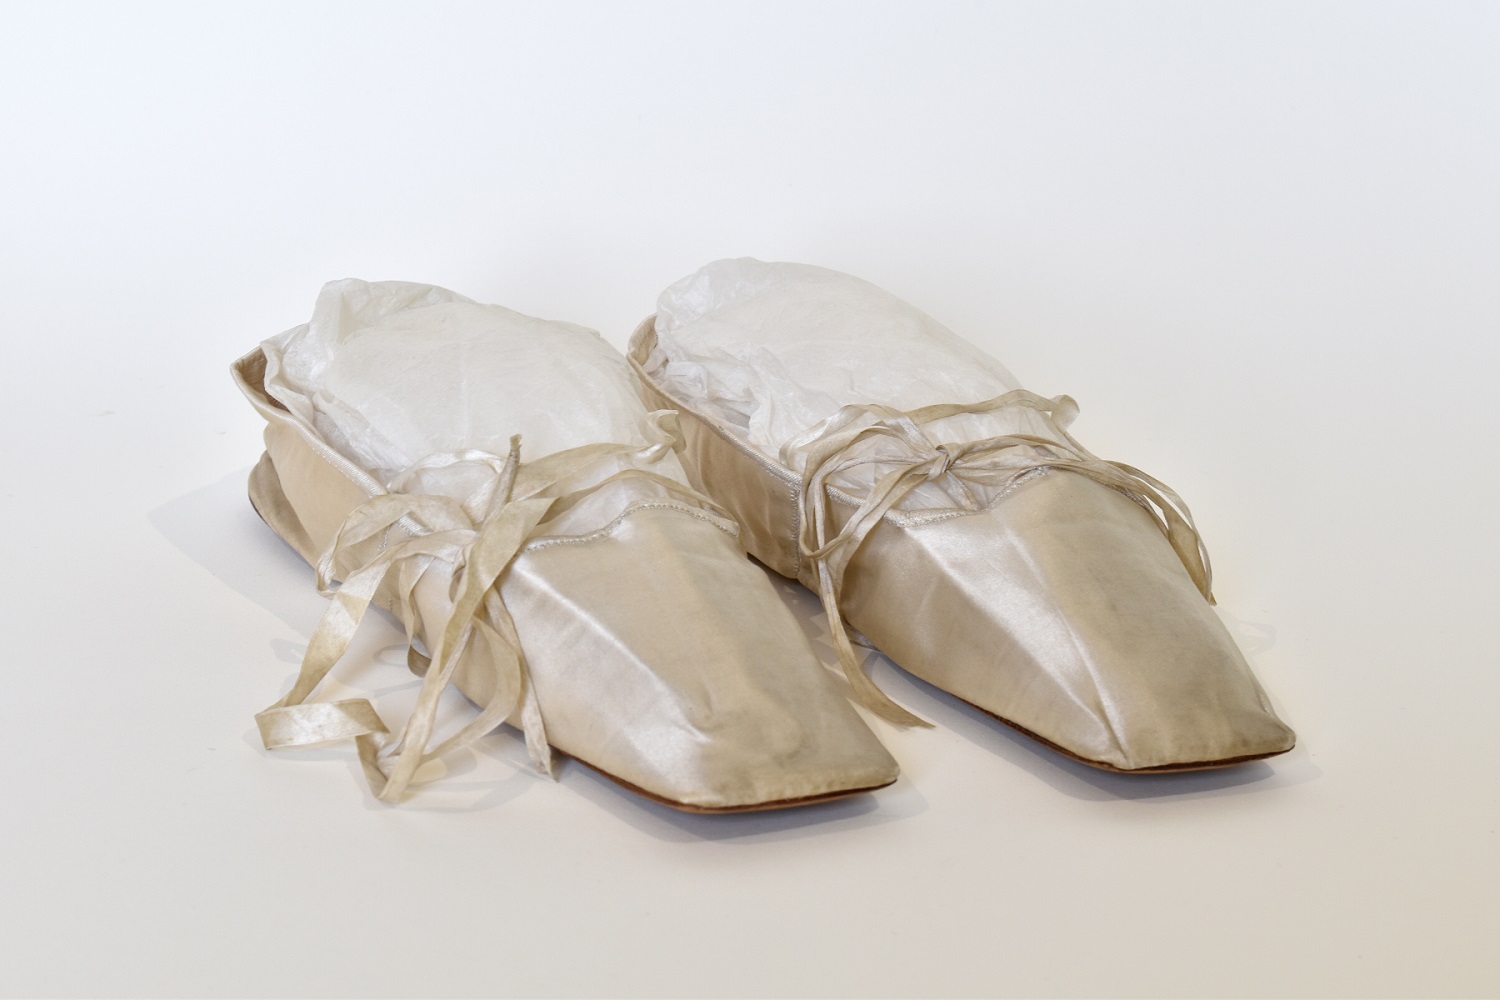 A pair of ivory silk slippers belonging to Jane Austen's niece, Marianne Knight